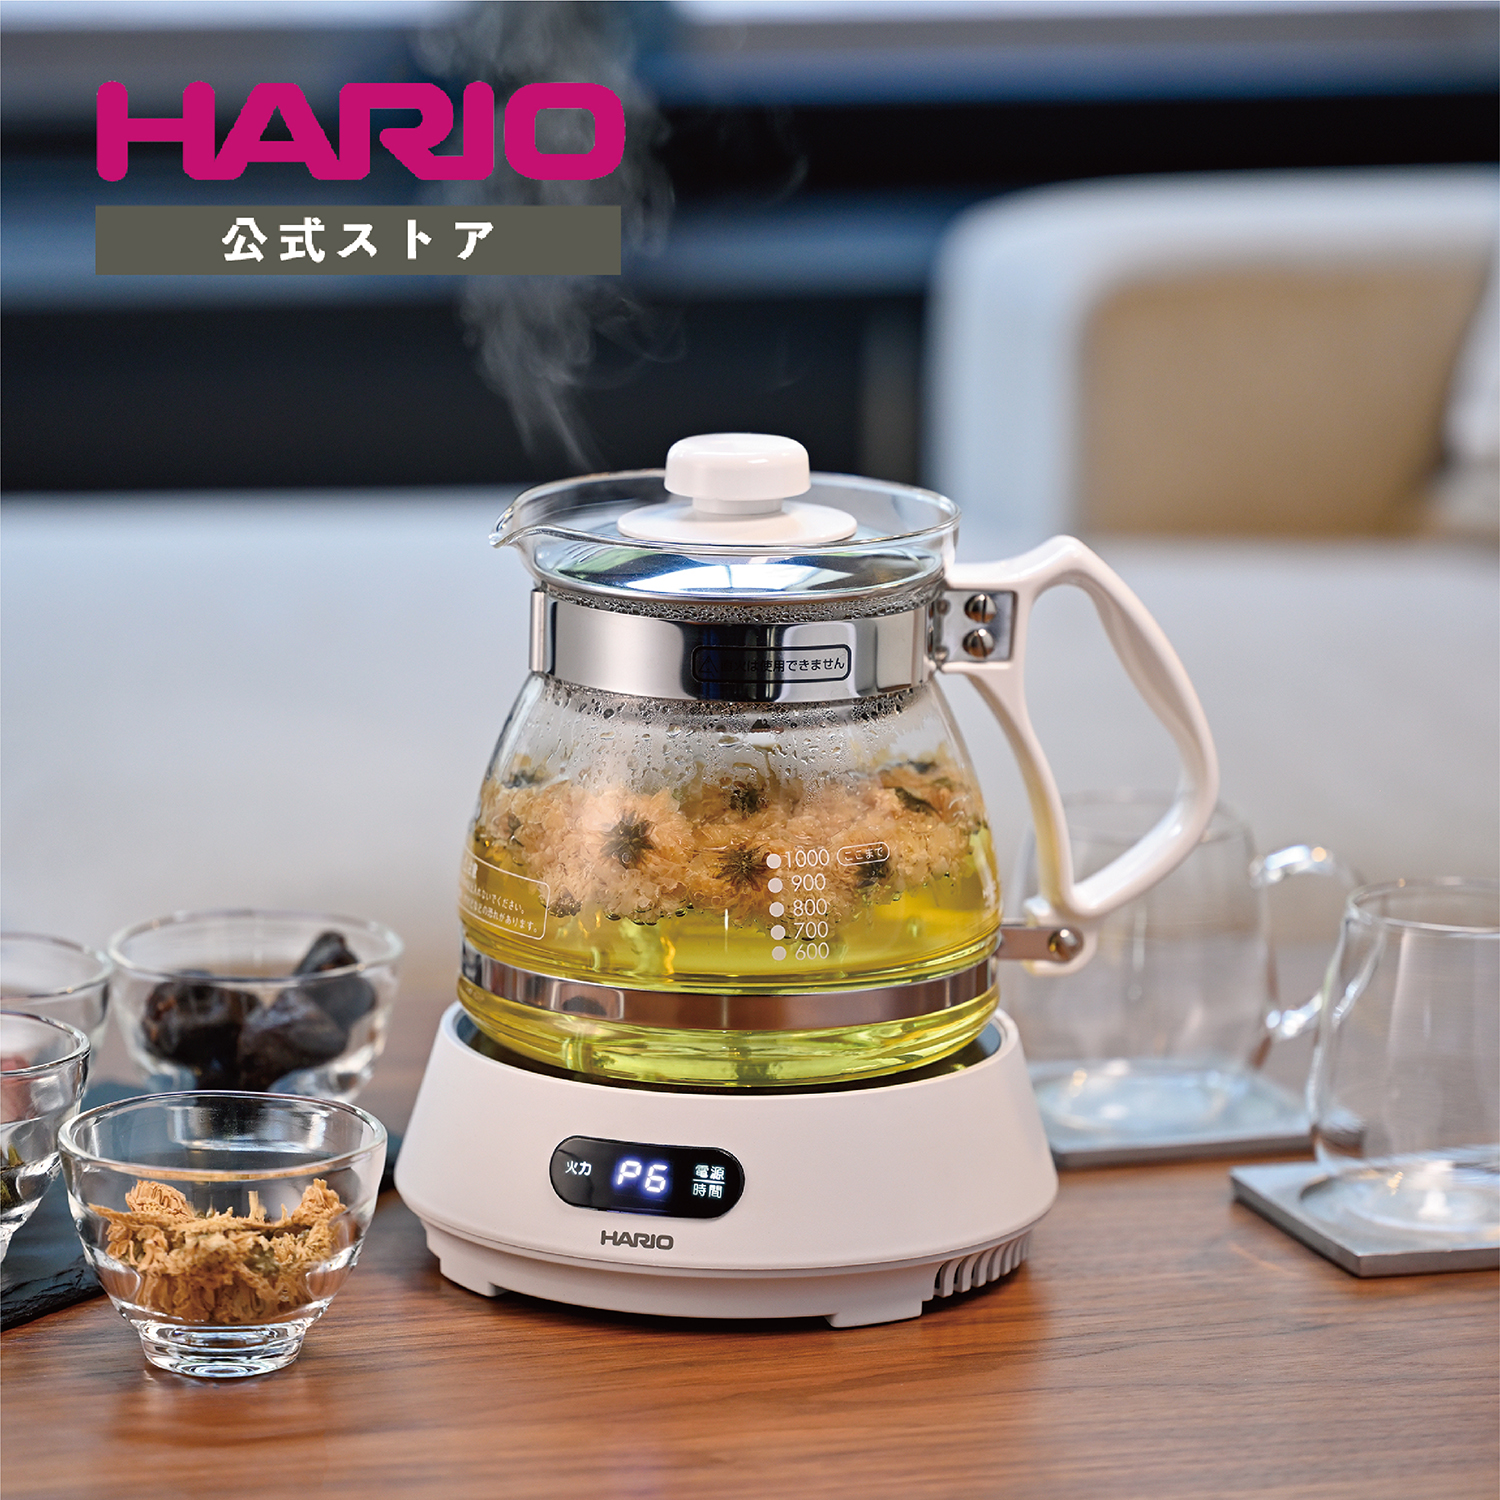 Hario Craft Tea Maker